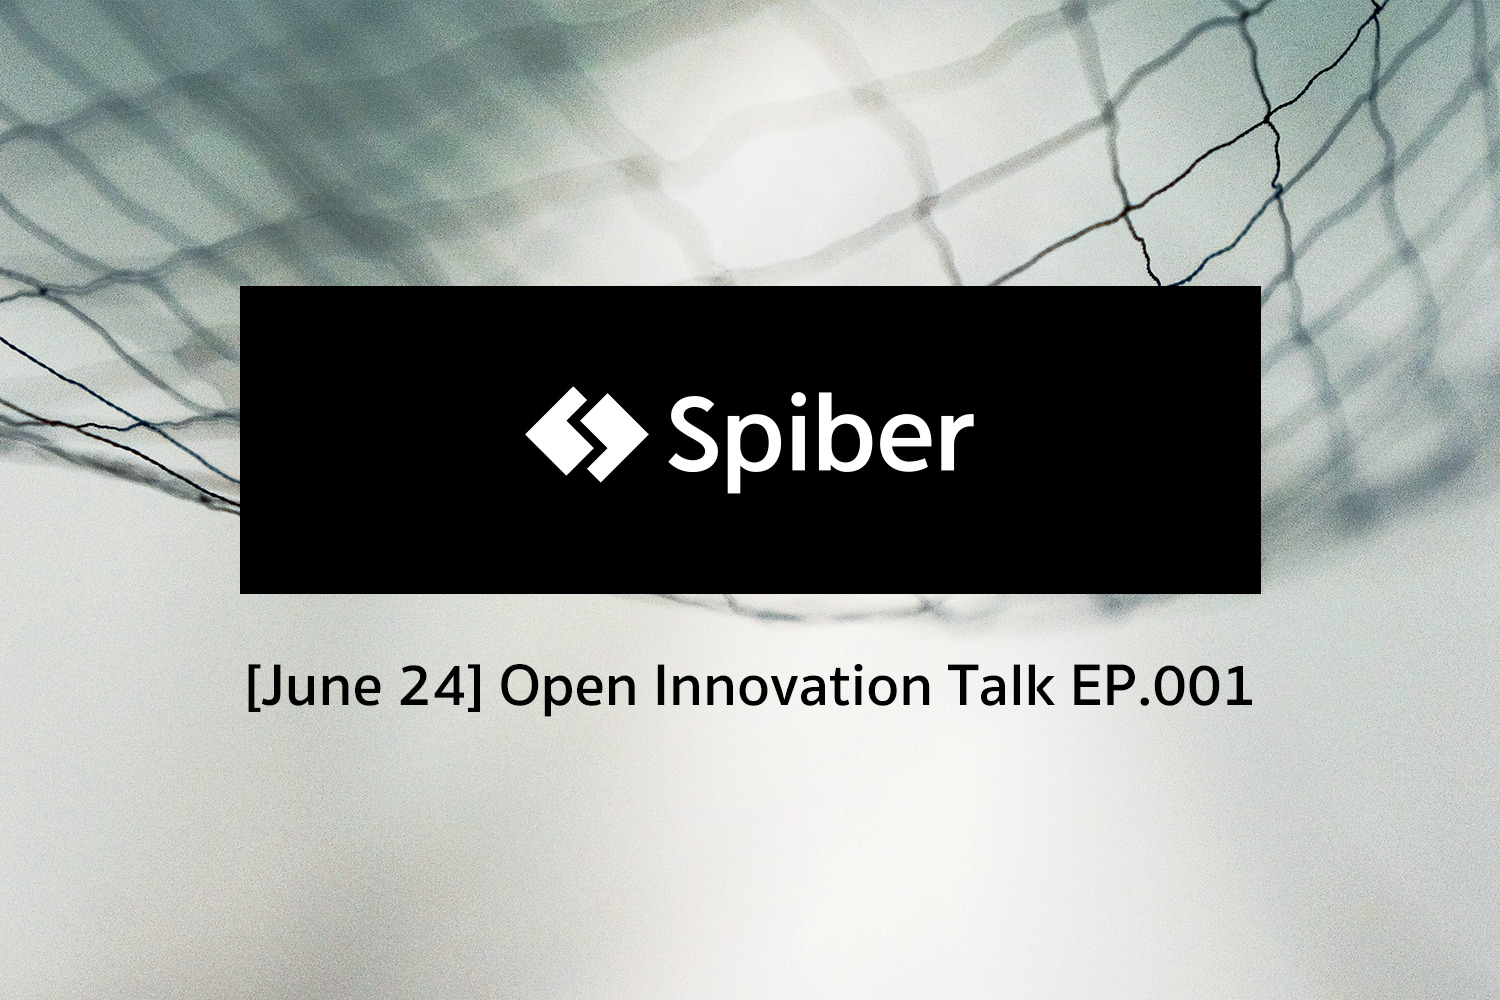 [June 24] สัมภาษณ์ Unicorn Startup ไบโอเทคญี่ปุ่น “Spiber” สร้างนวัตกรรมปฏิวัติอุตสาหกรรมเส้นใย | Open Innovation Talk EP.001のメイン画像